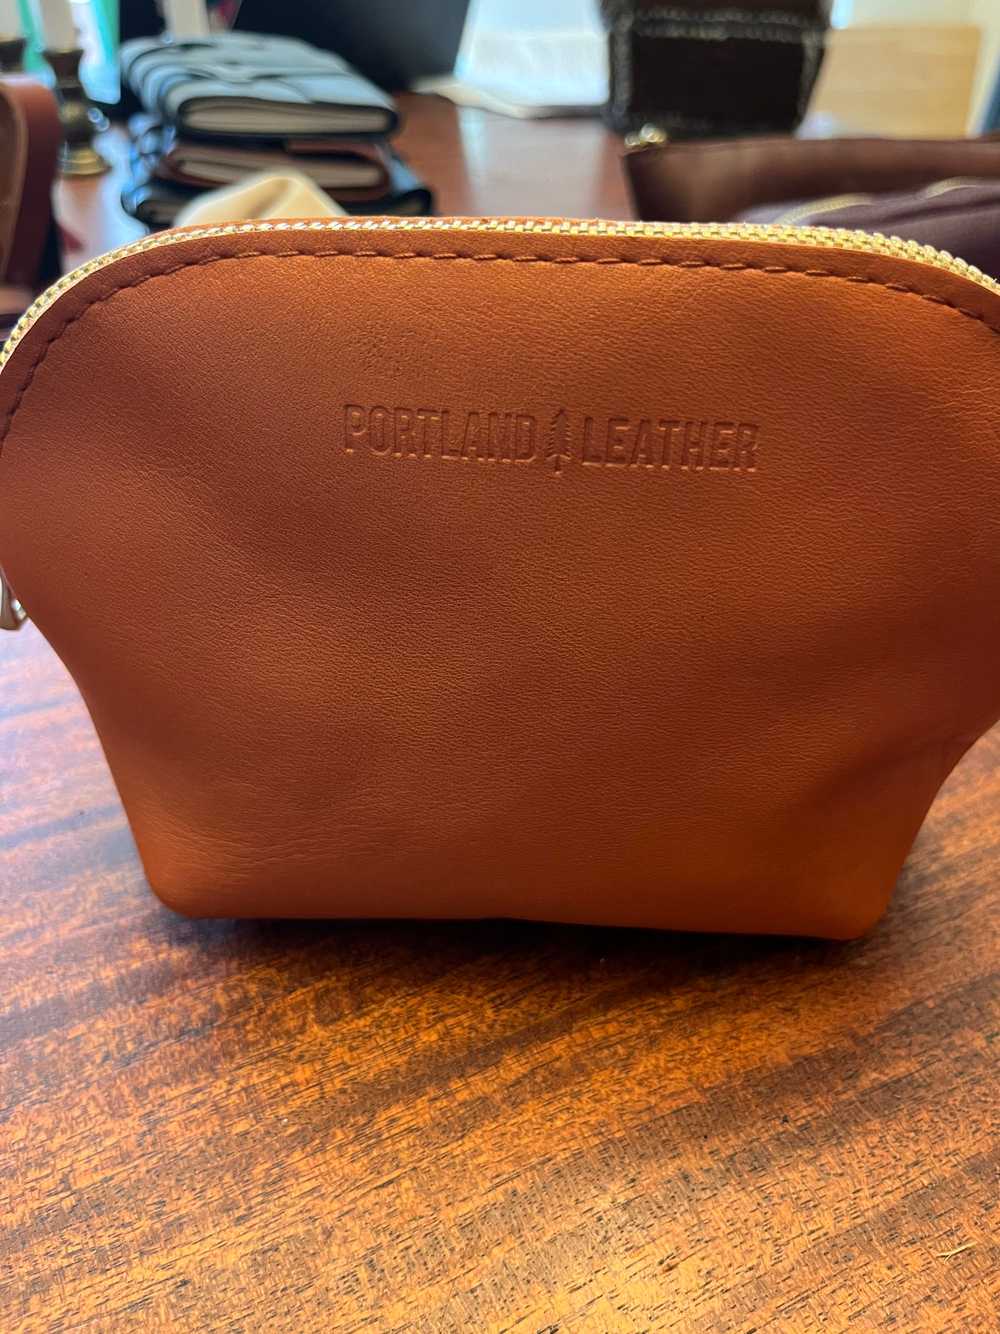 Portland Leather 'Almost Perfect' Bella Makeup Bag - image 6